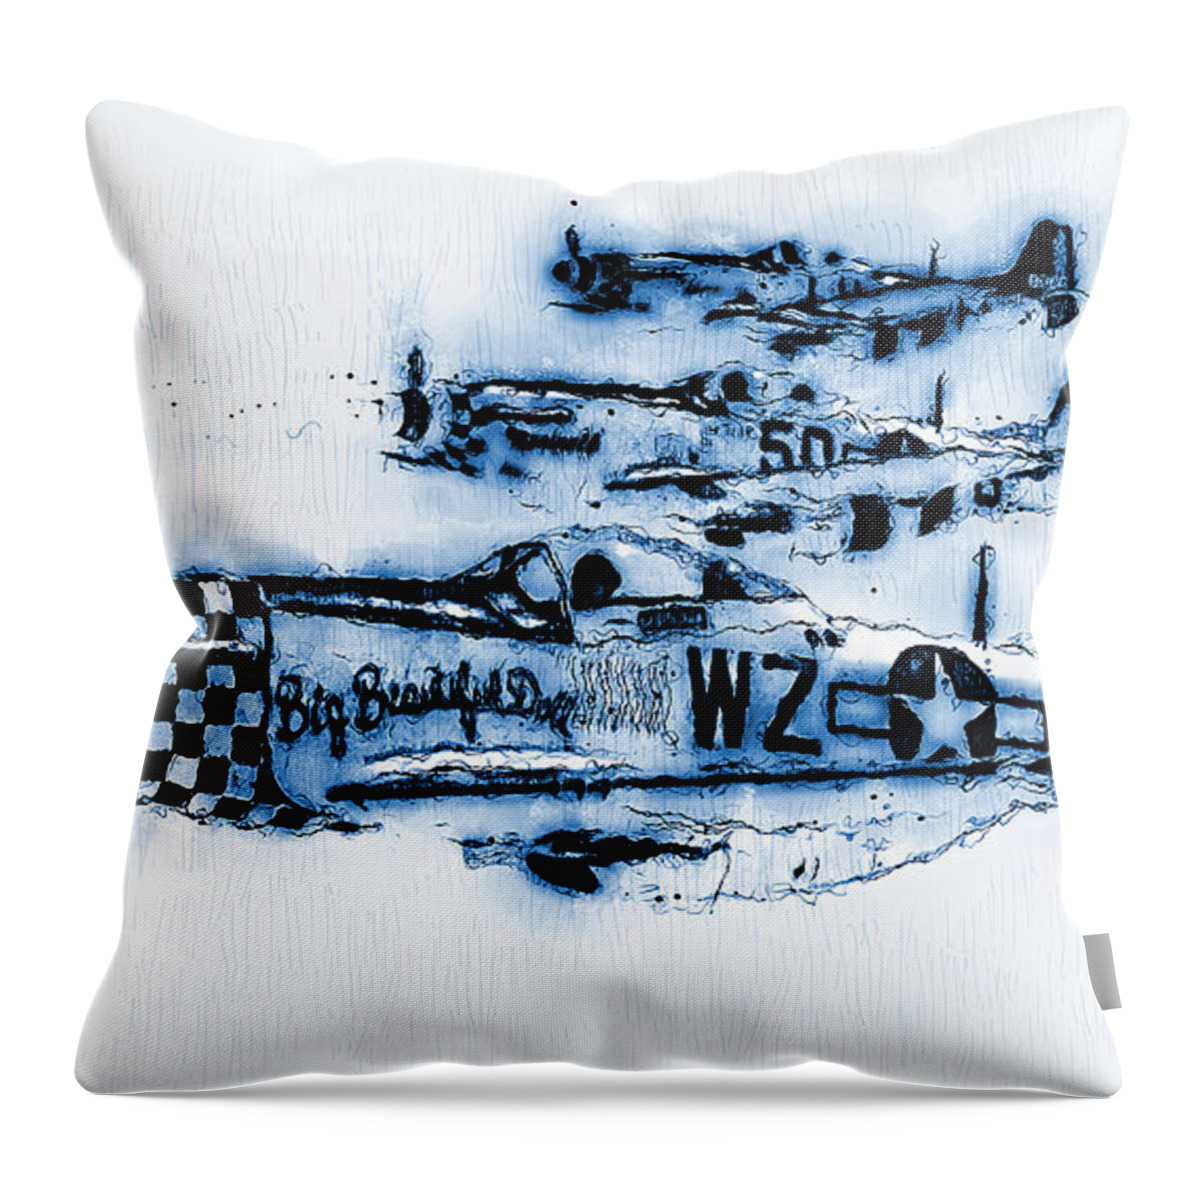 P 51 Throw Pillow featuring the digital art P-51 Mustang - 13 by AM FineArtPrints